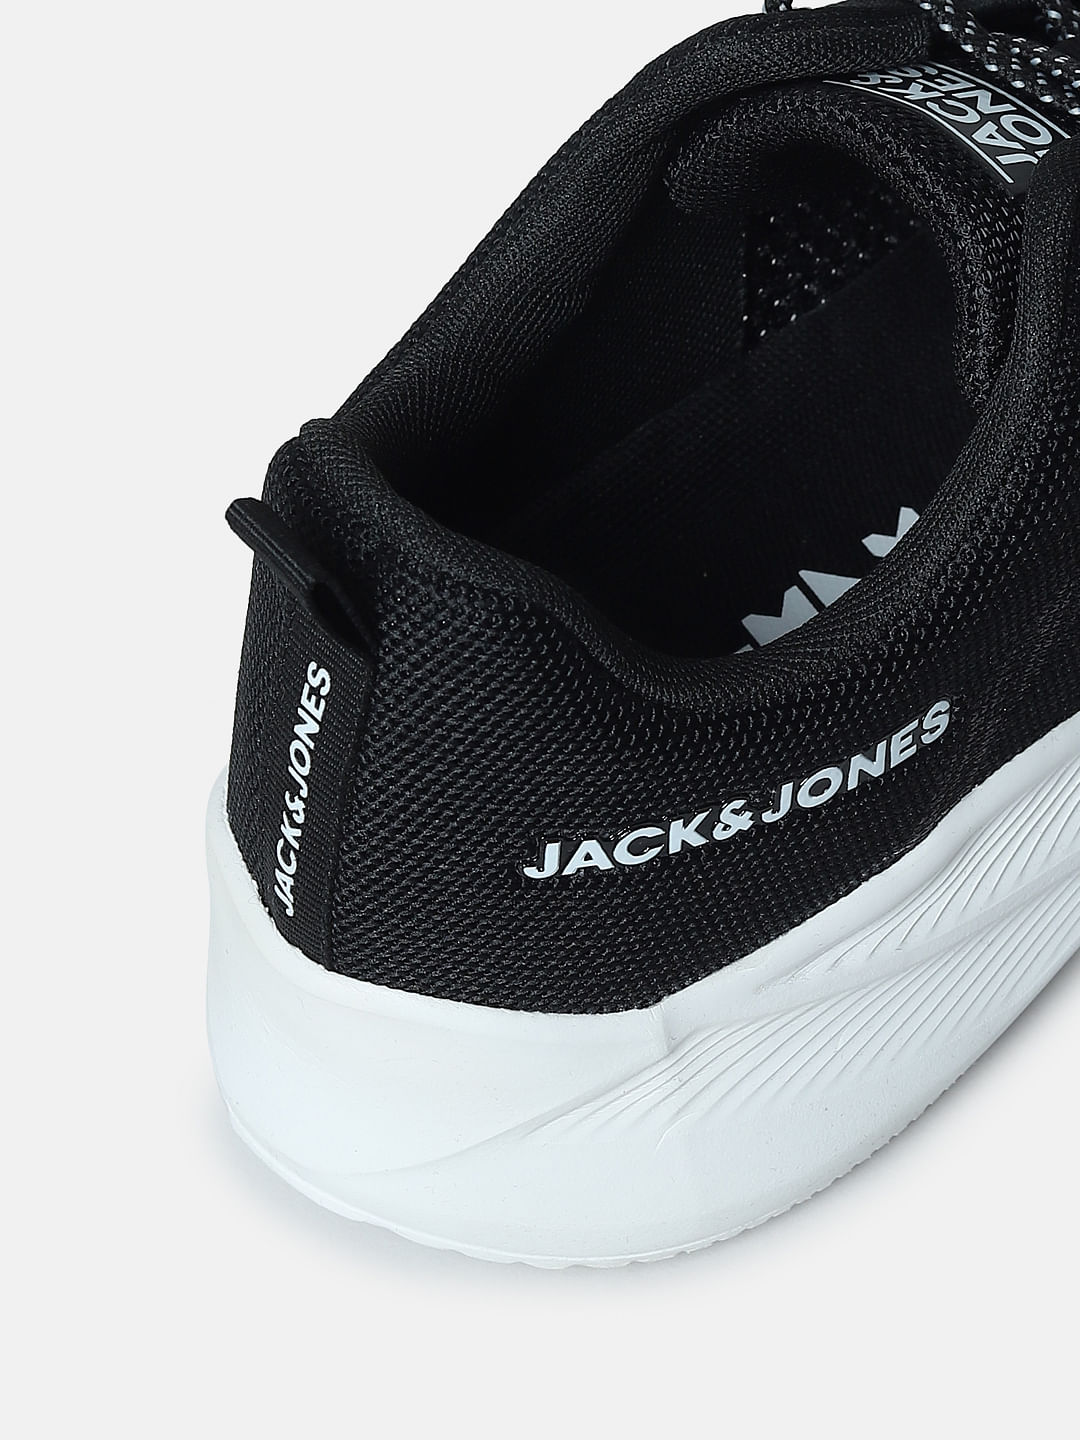 Nike E Series AD Mens Running Shoes Black DV2436-003 – Shoe Palace